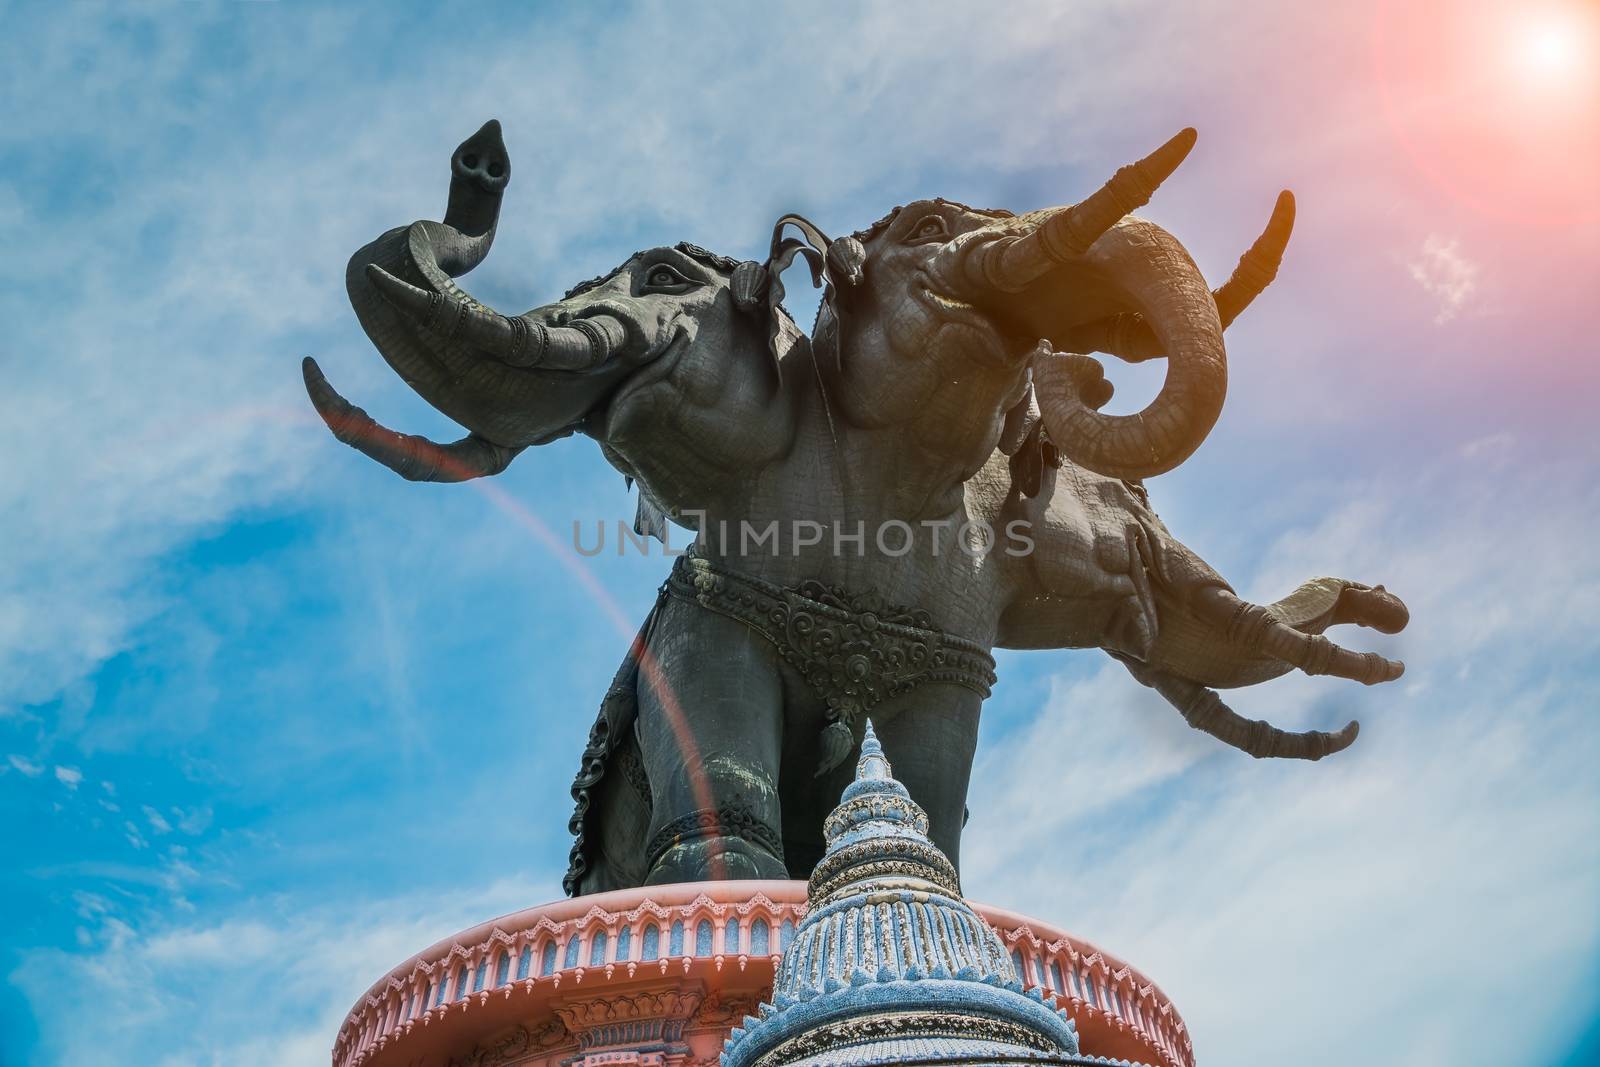 Erawan museum, Bangkok Thailand, elephant statue in the sunlight by psodaz